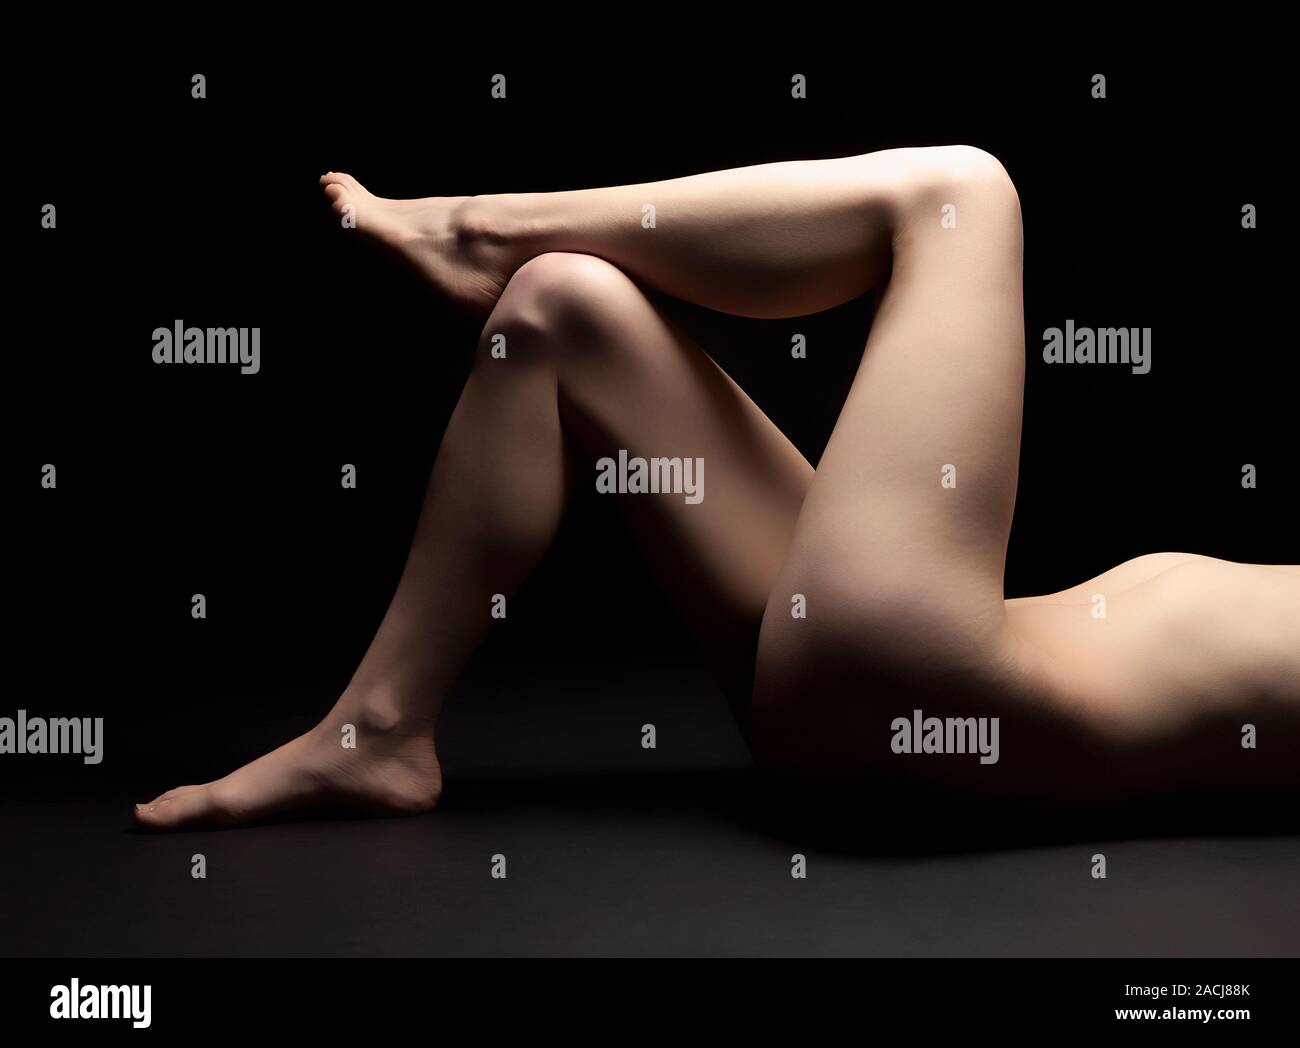 Woman, female, nude figure. Stock Photo